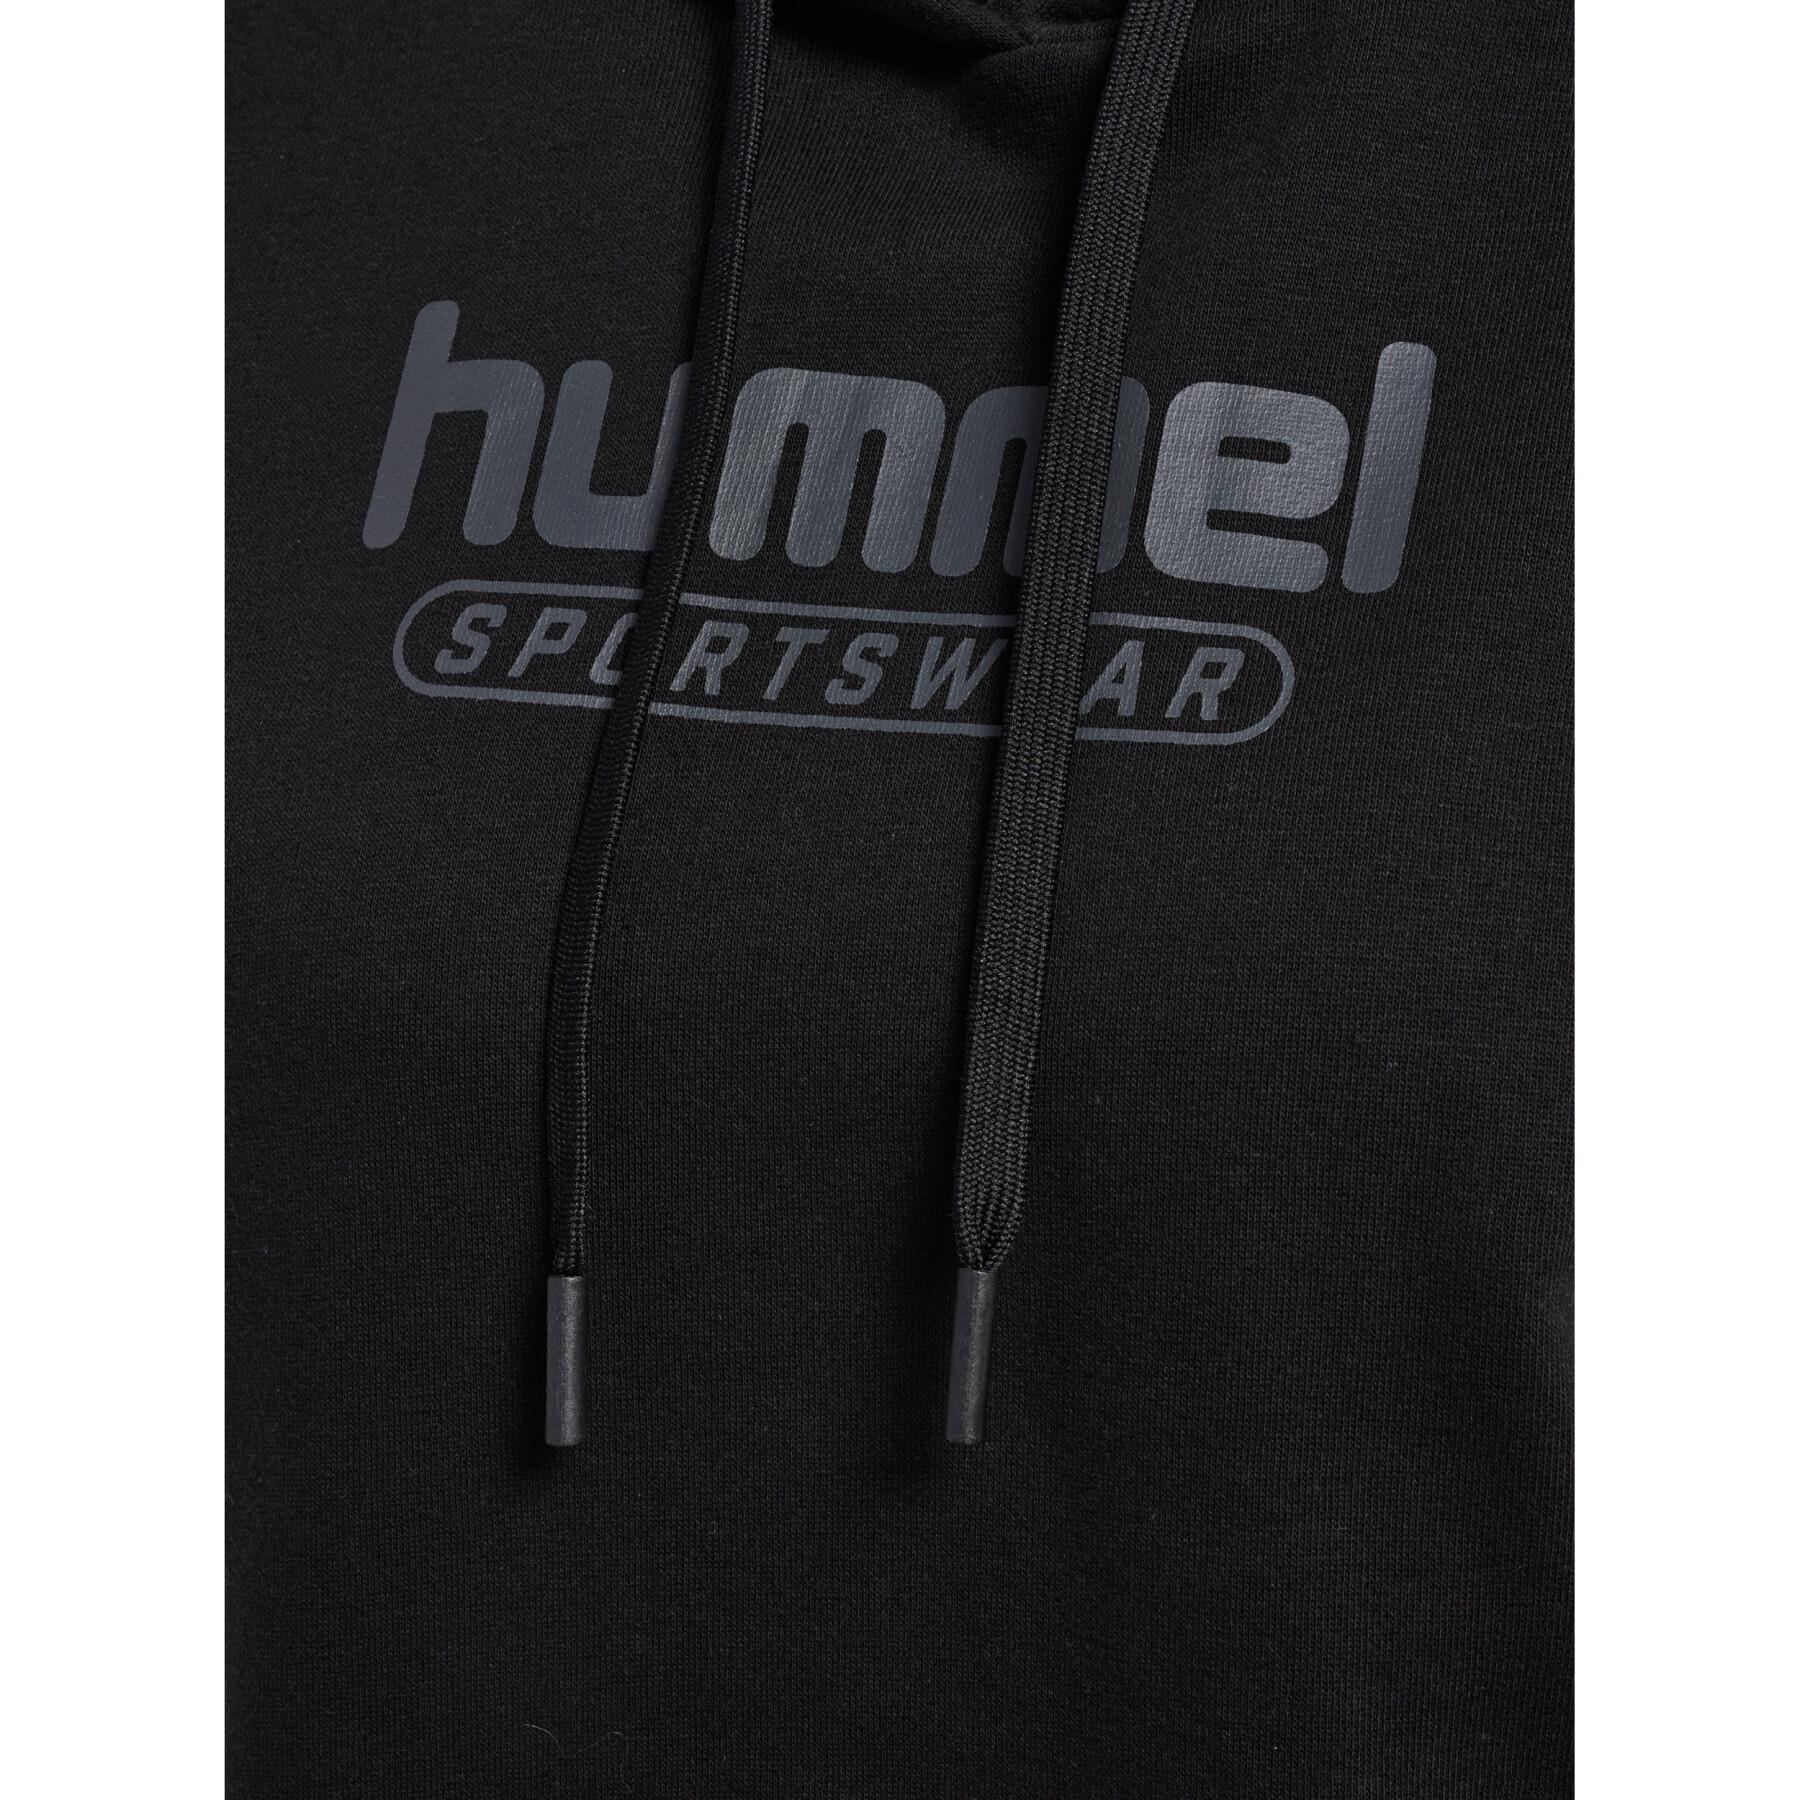 Sweat bluza z kapturem dla kobiet Hummel Booster